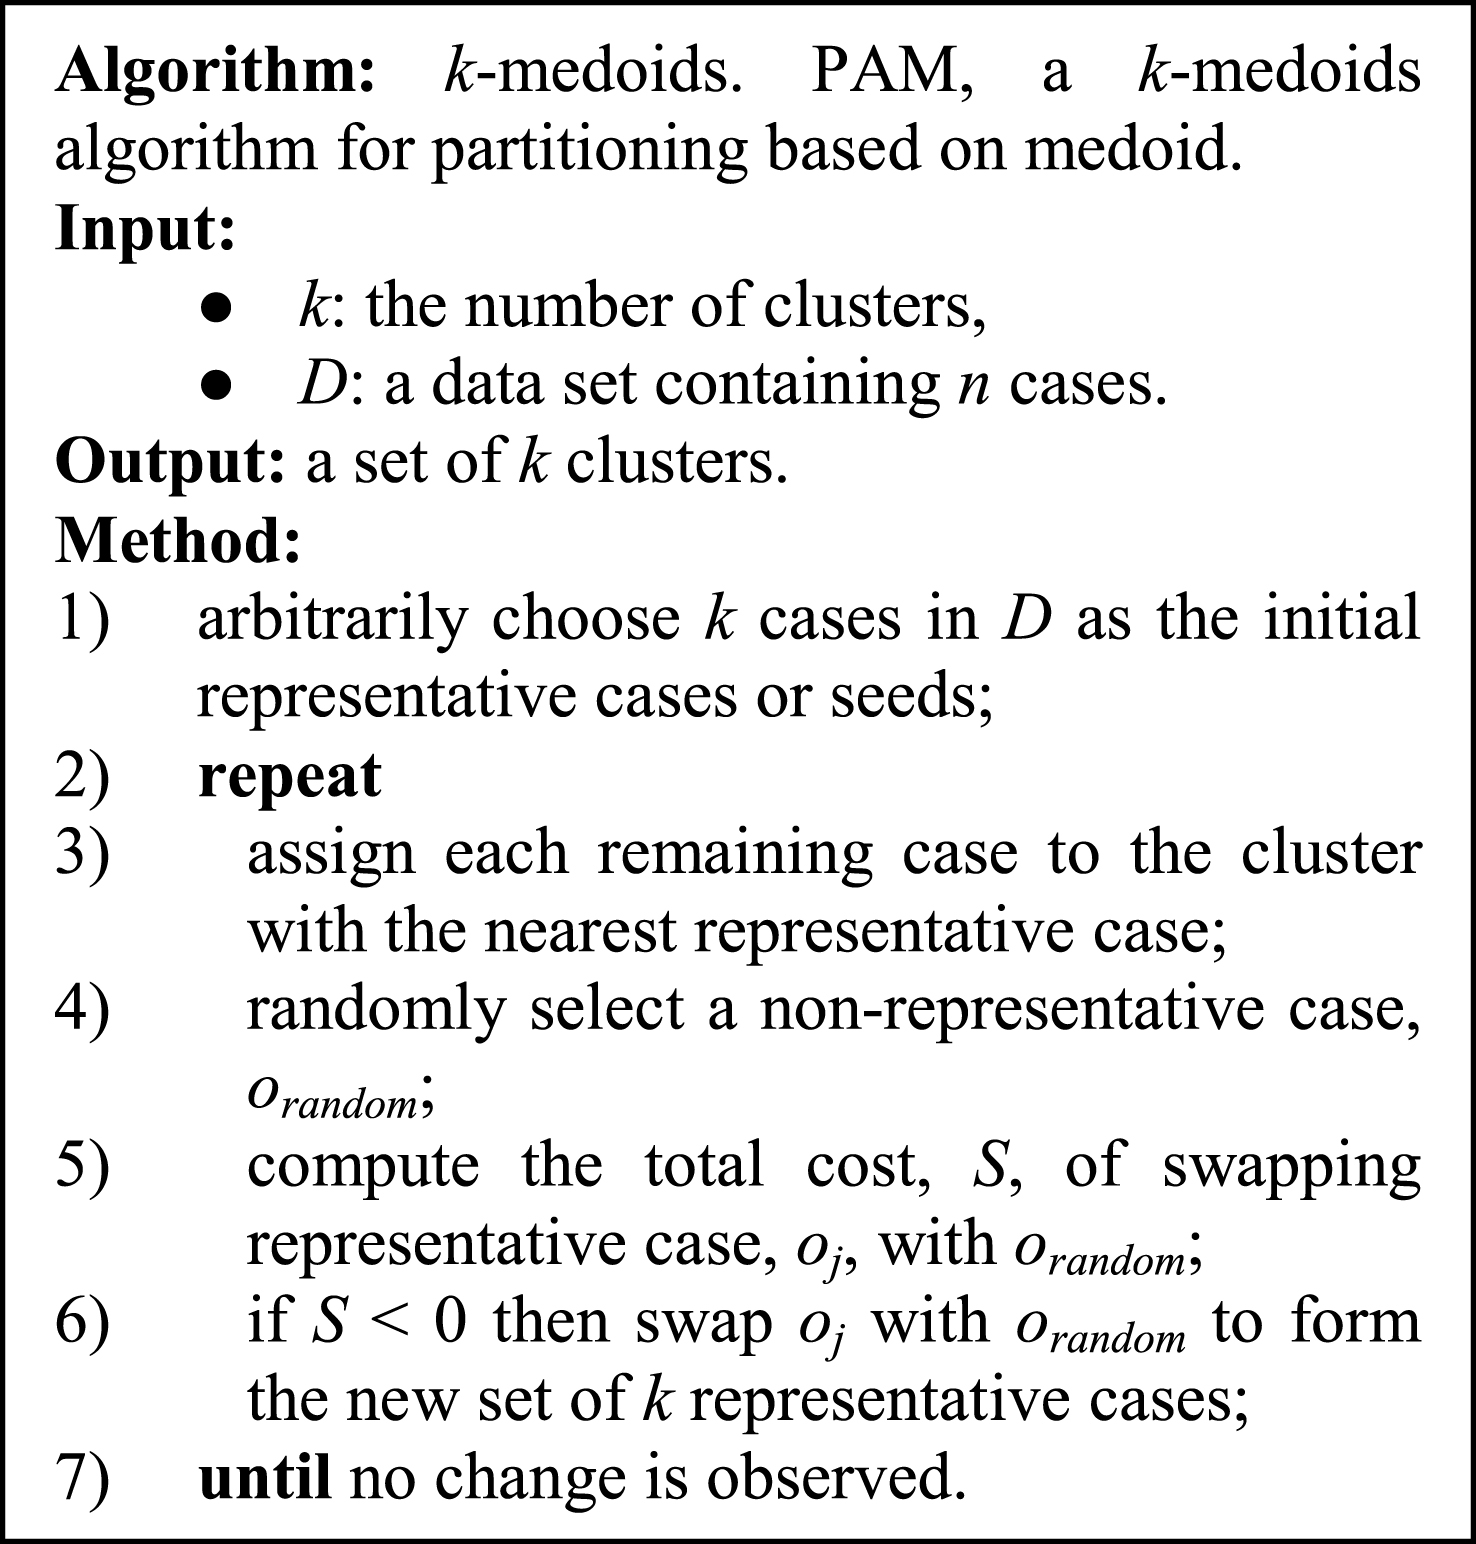 PAM, a k-medoids partitioning algorithm.